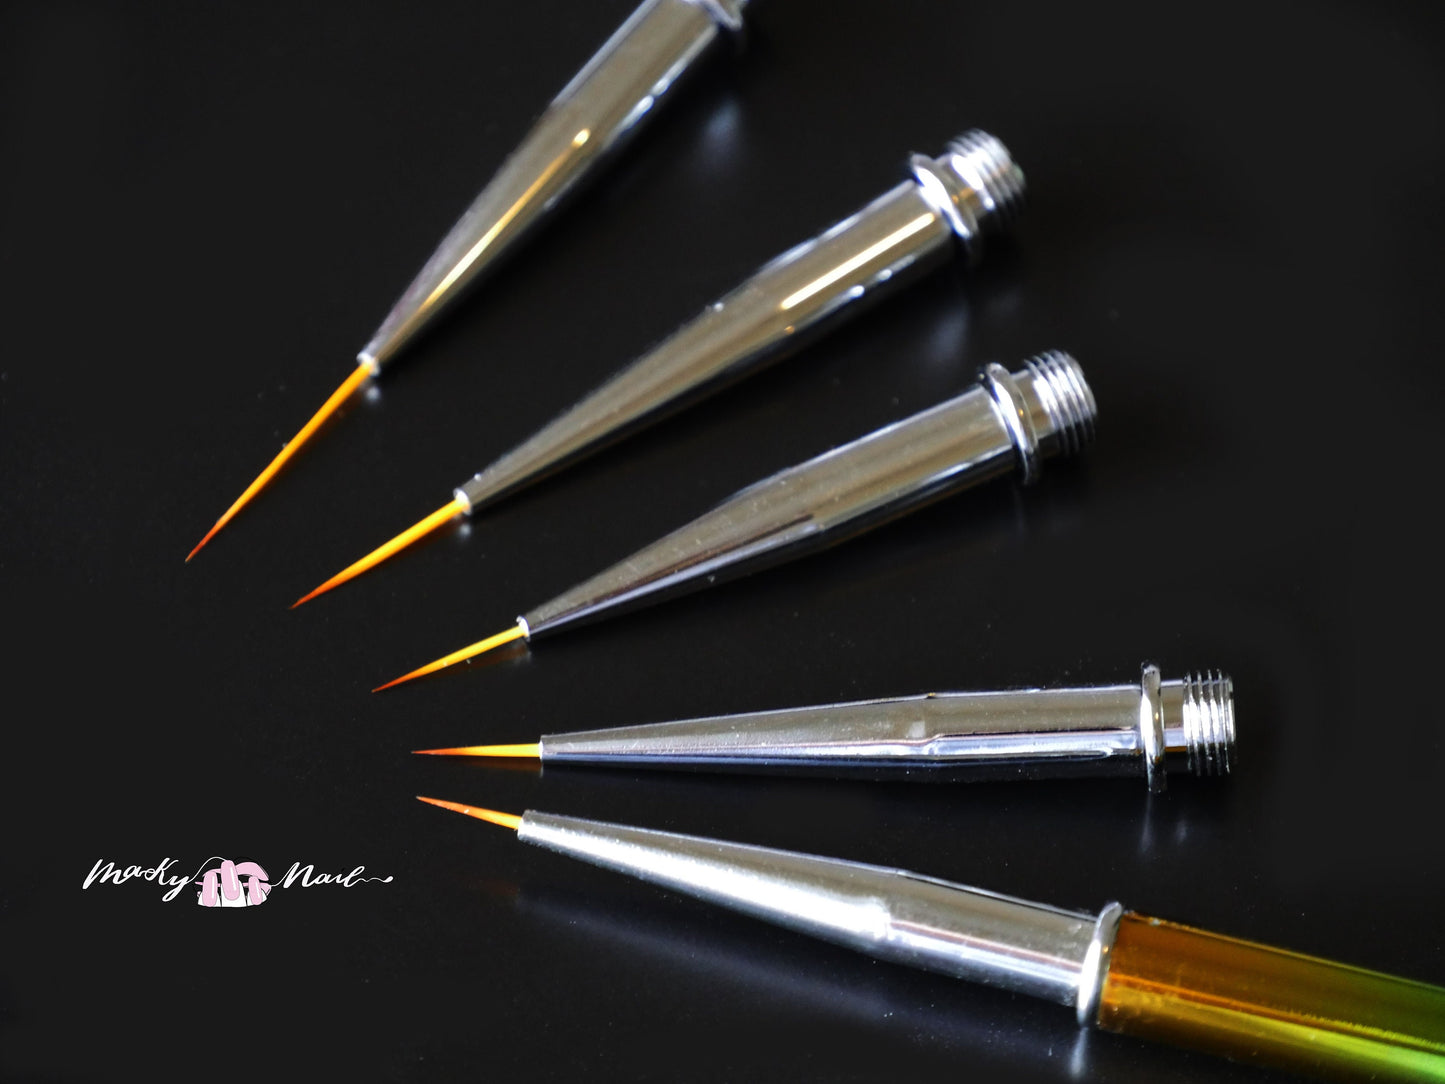 Nail Detailing Brush/ Chameleon Electroplate Brush Set for Detailing Striping Nail Art Brushes, liner brush, Painting Brushes set